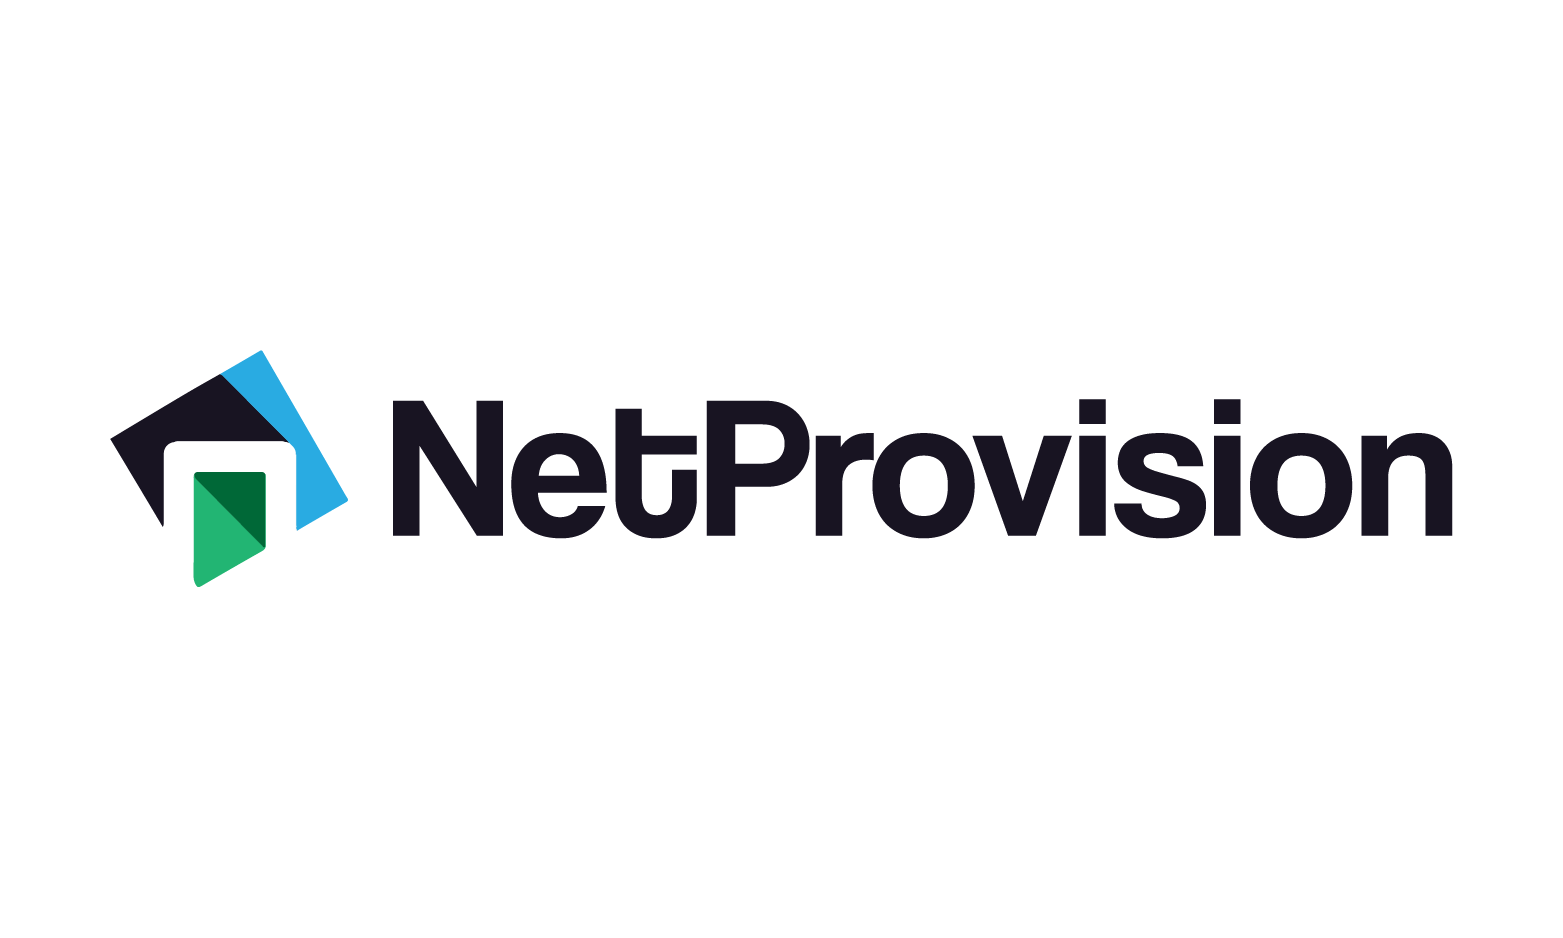 NetProvision.com - Creative brandable domain for sale